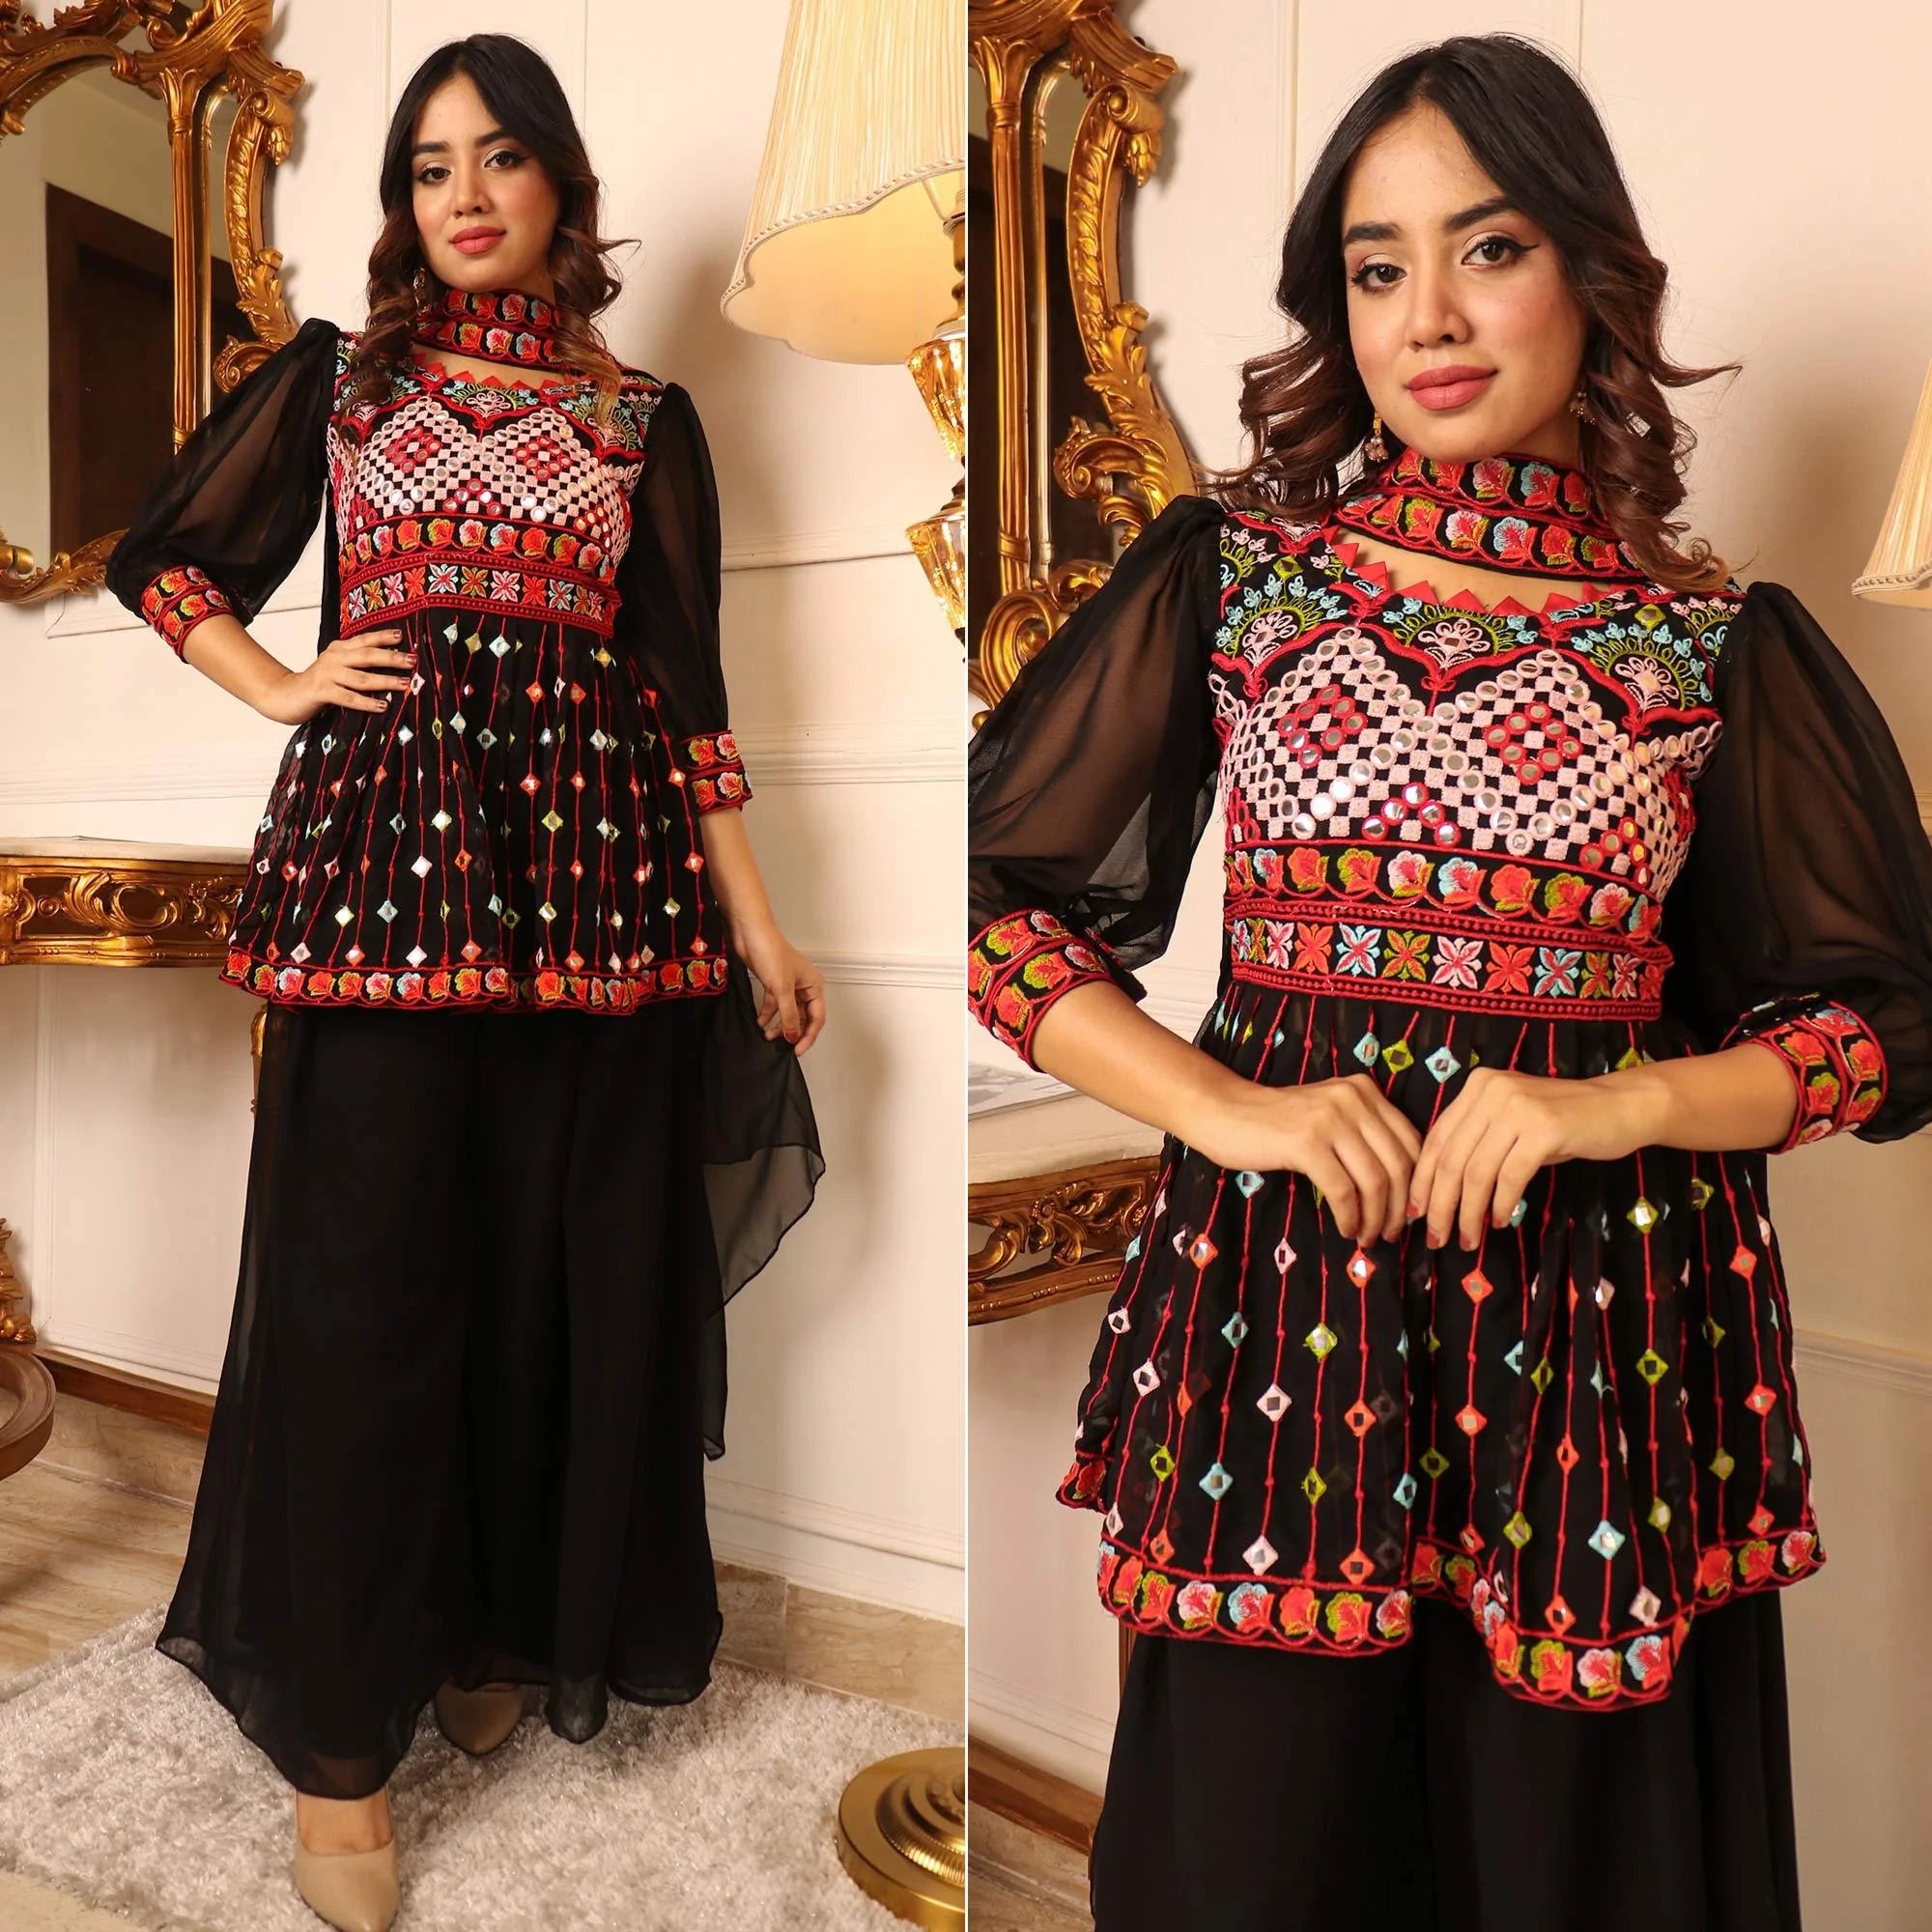 Latest Punjabi Suits Online: Check Out Stunning New Styles & Designs at  Utsav Fashion